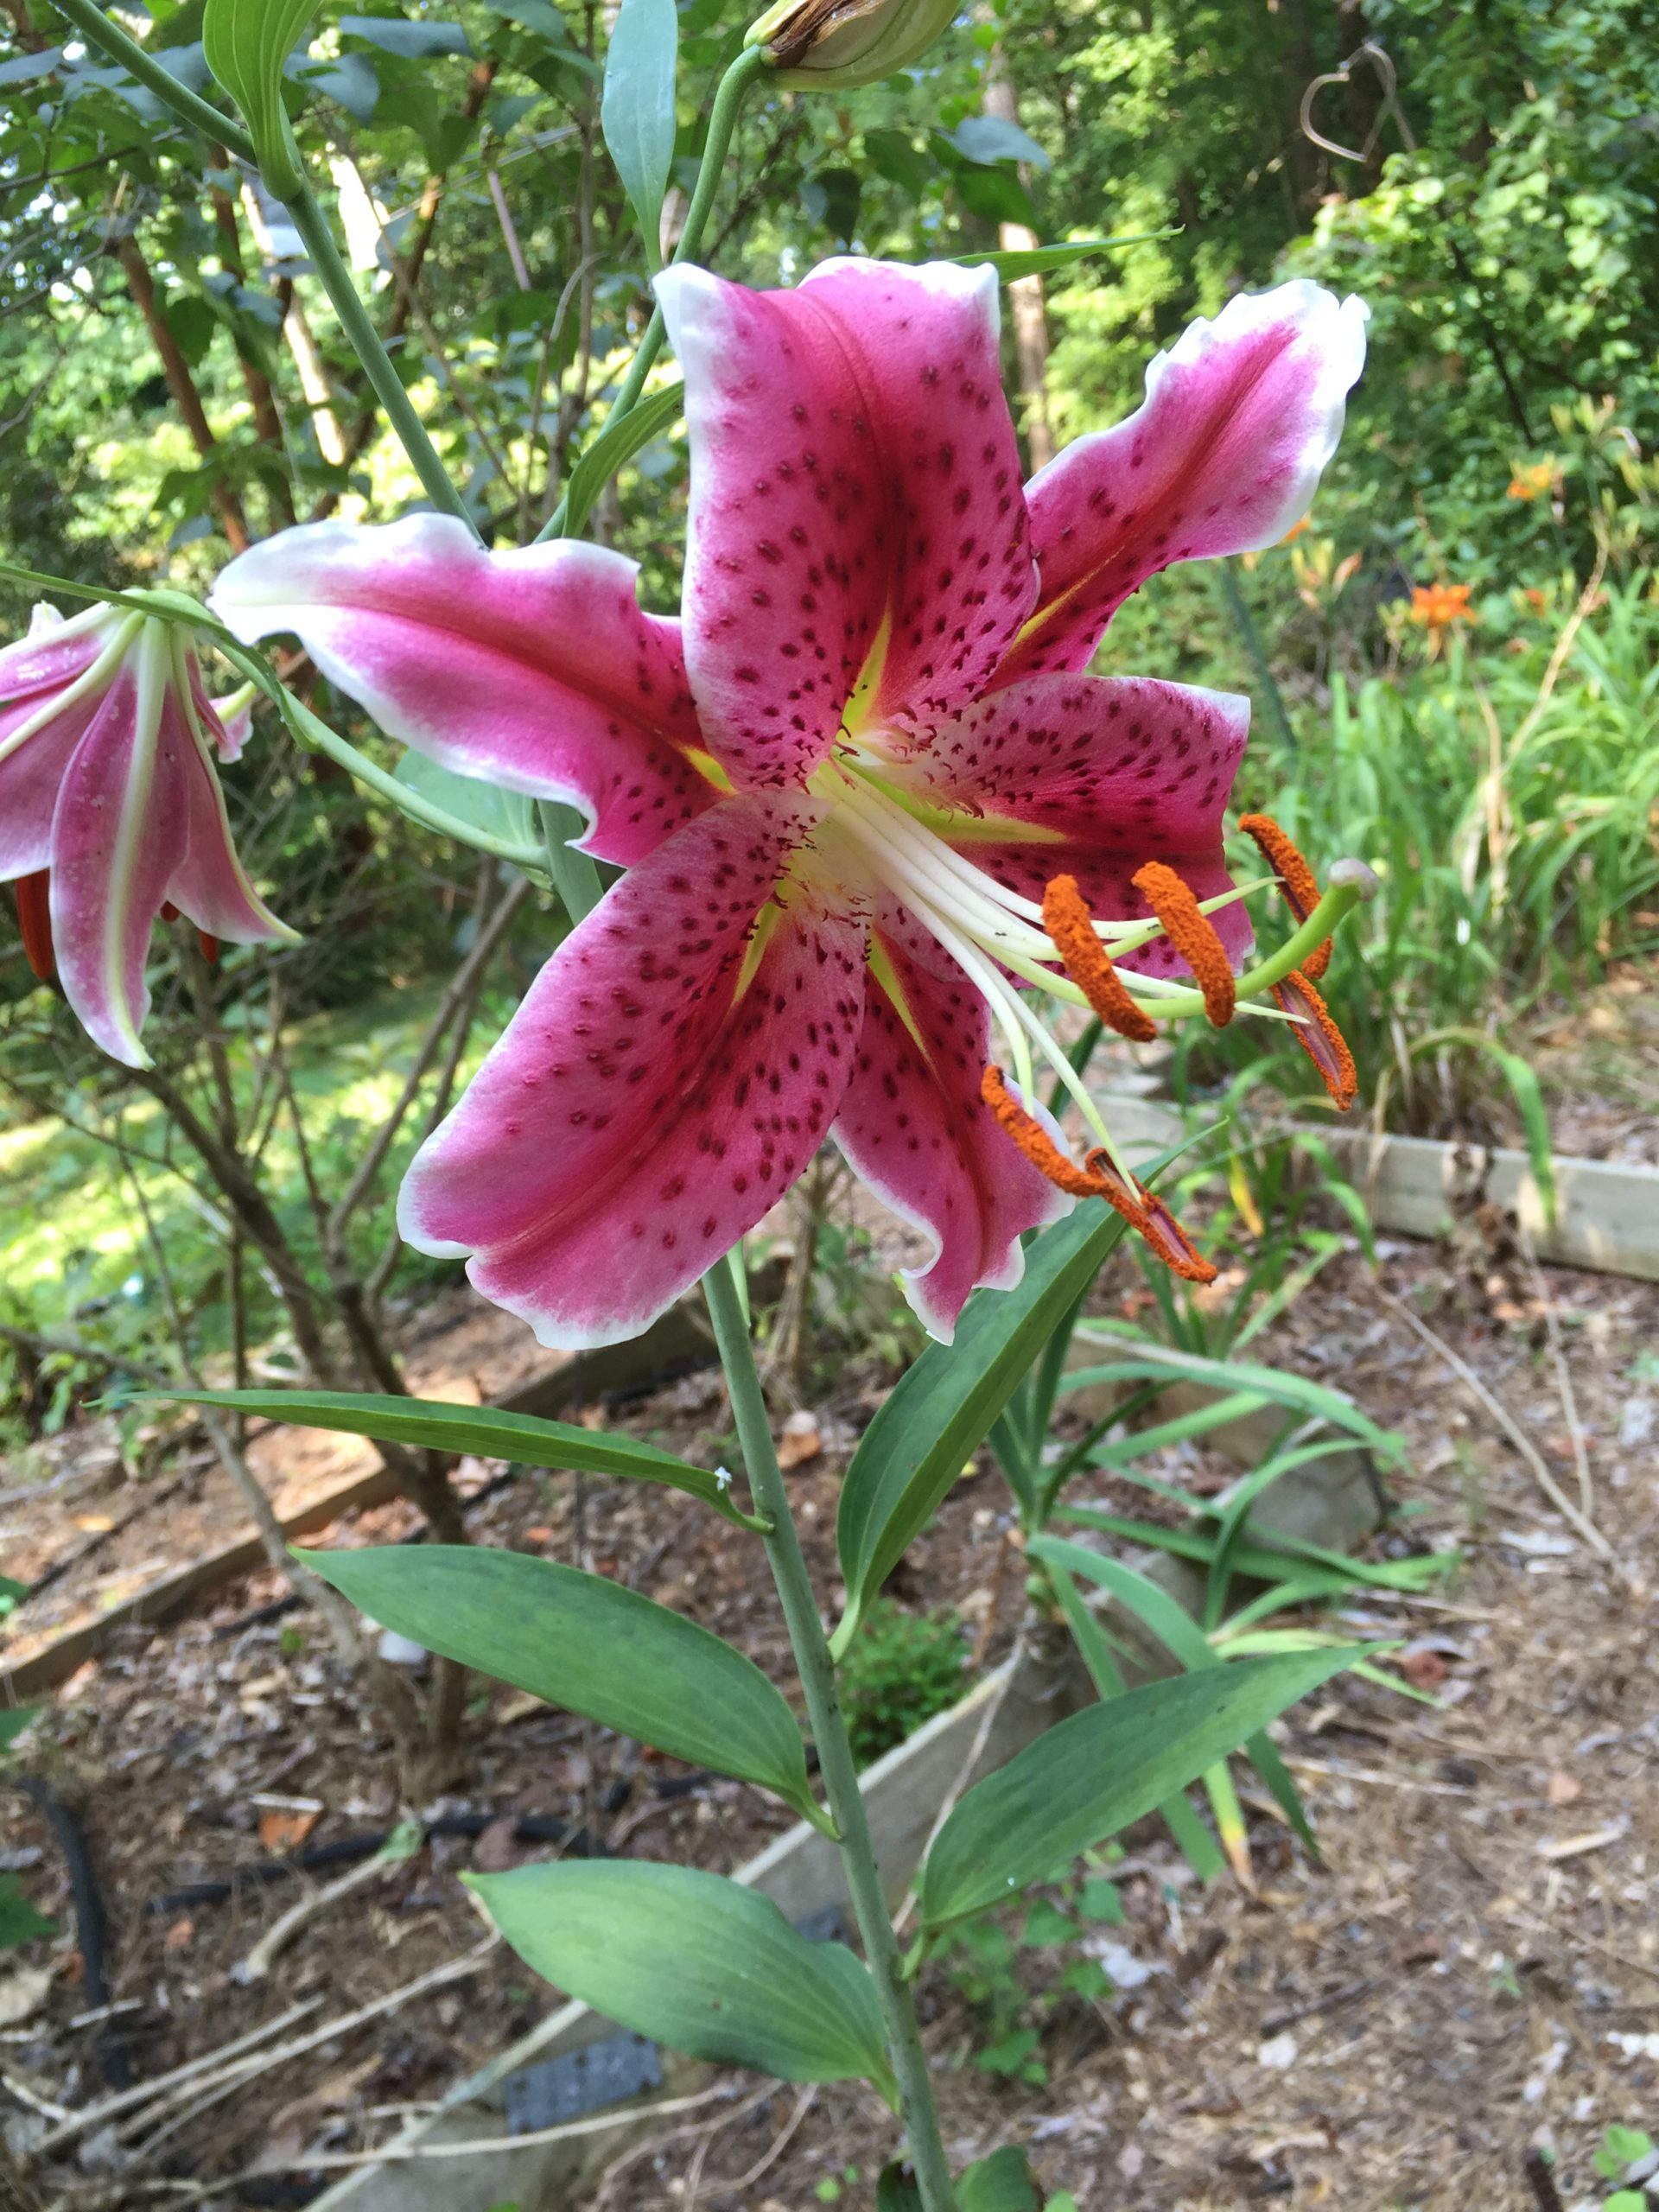 'Stargazer' lily